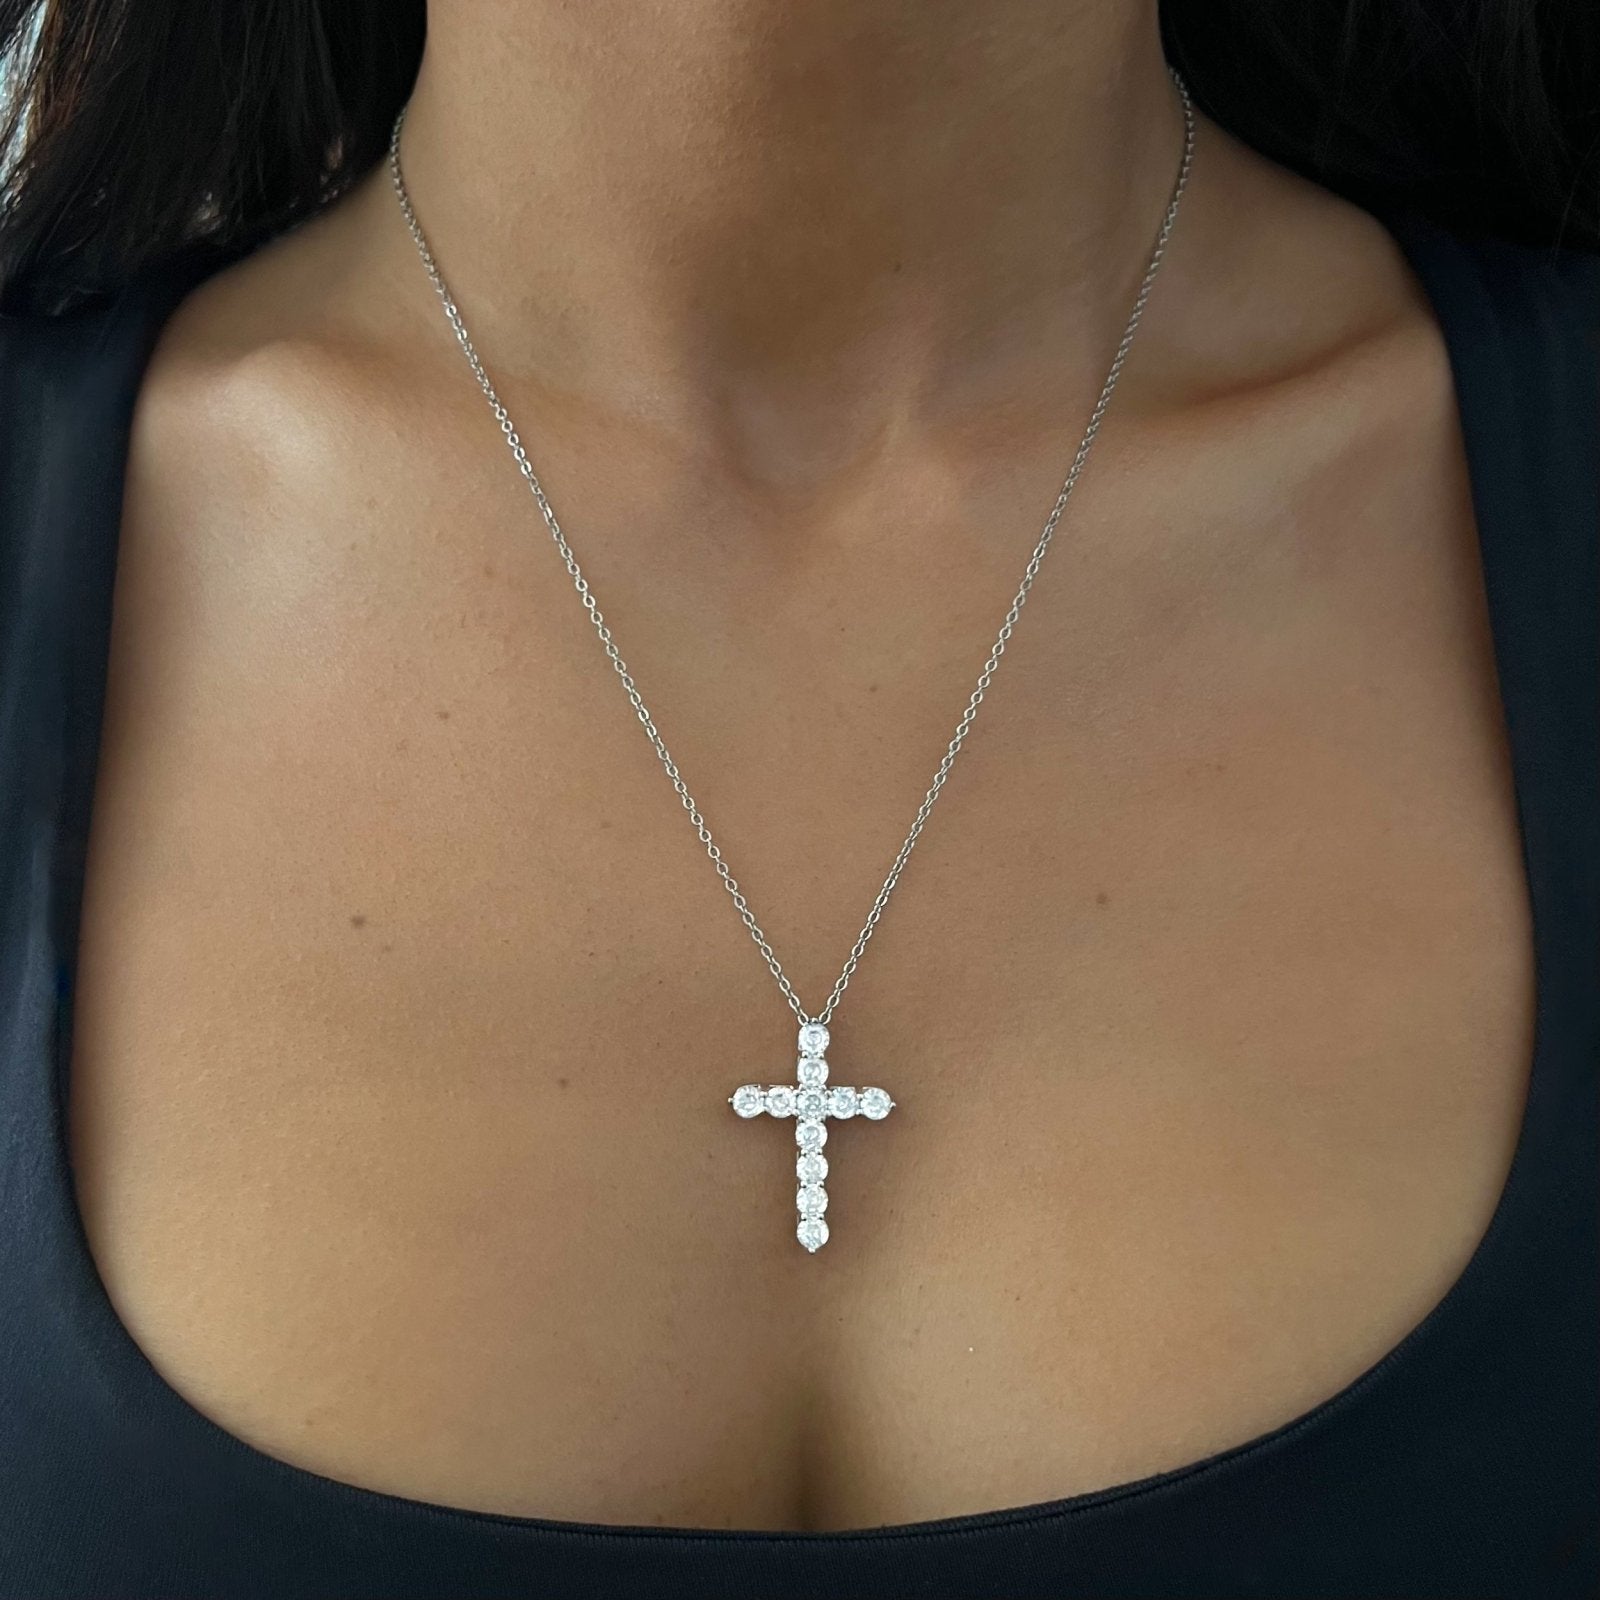 Sterling Silver Mini Cross Pendant Necklace - Luxe Emporium x